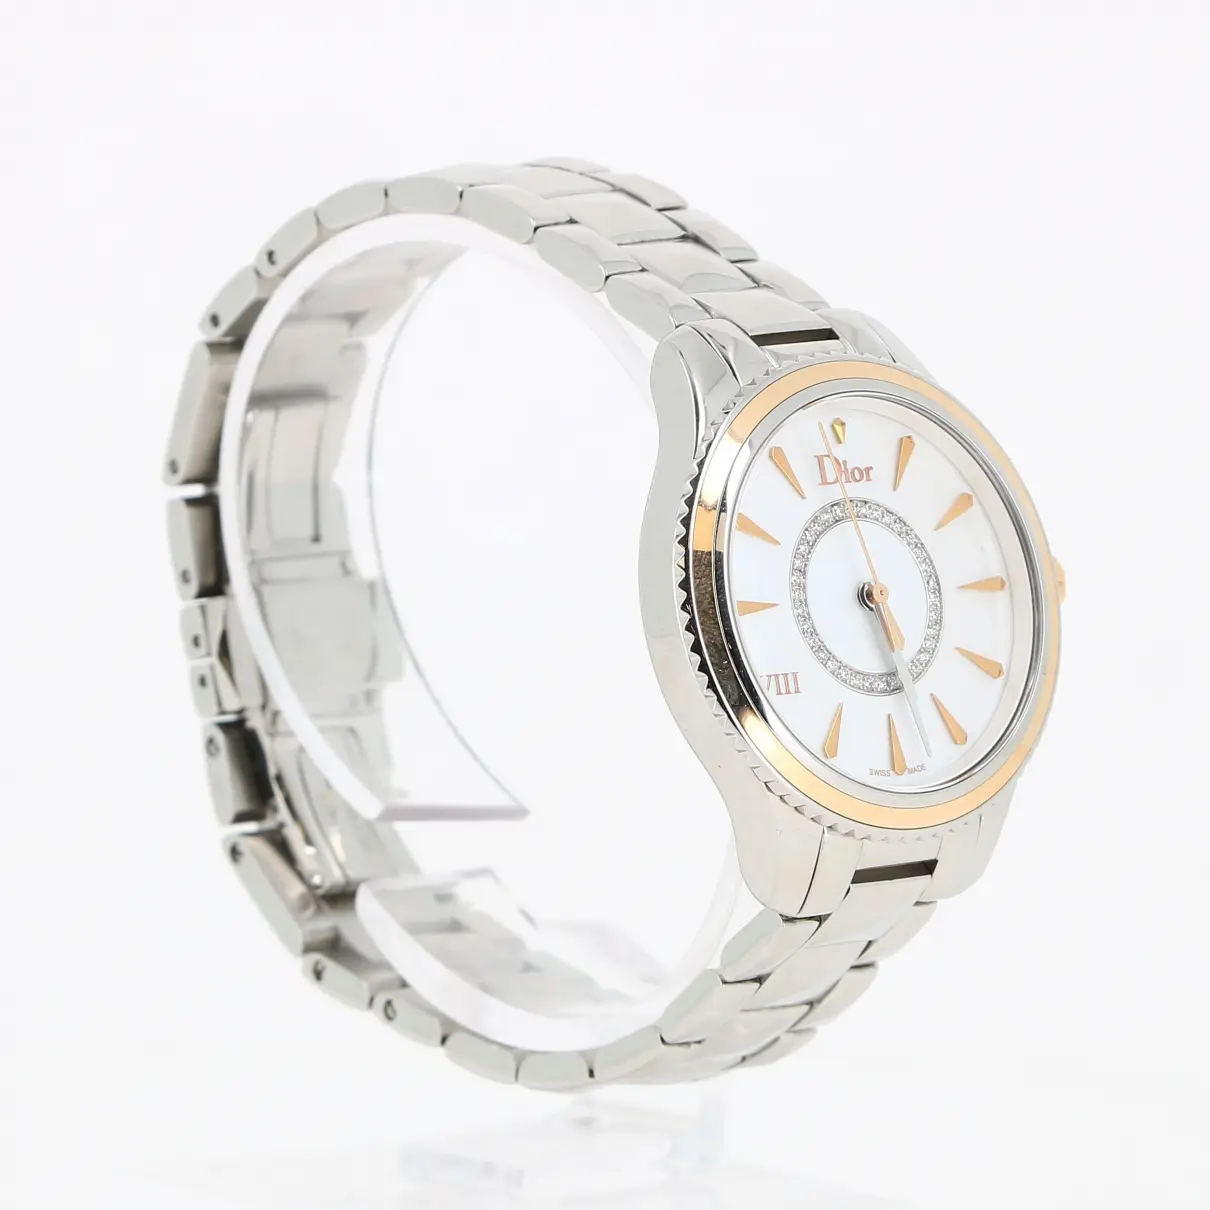 Buy Dior Silver watch online